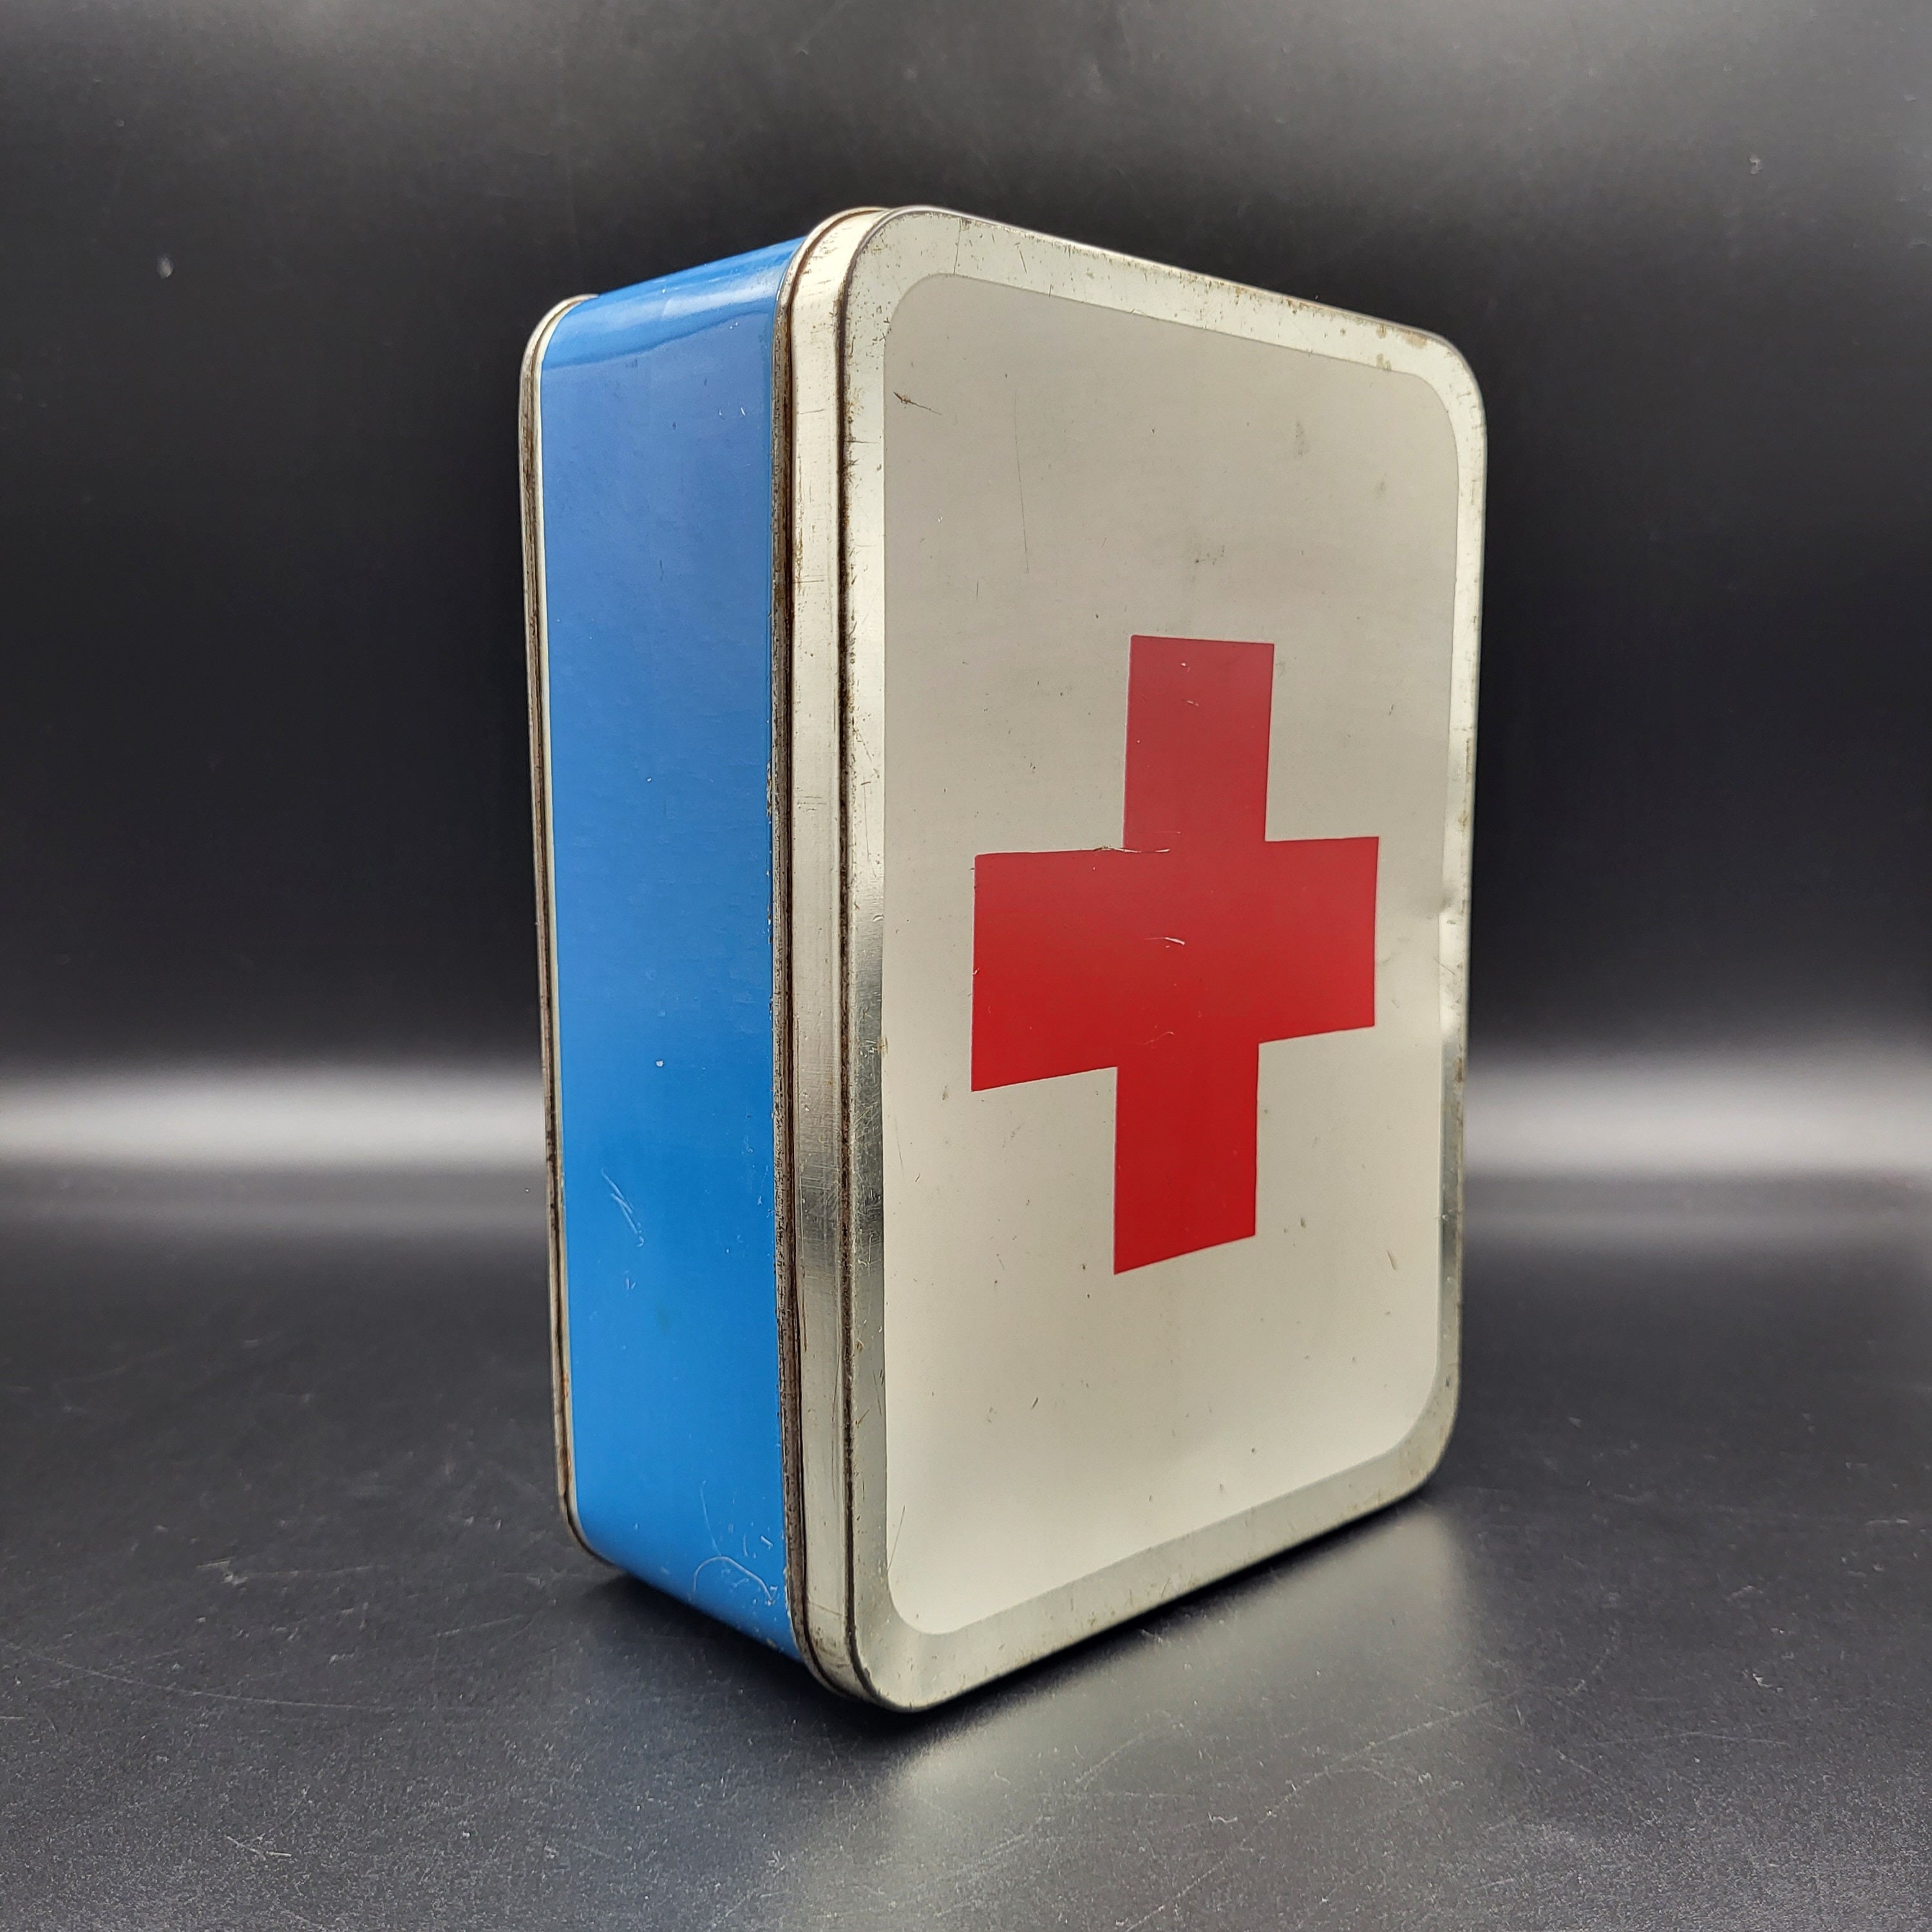 Bandaid Storage With Sliding Lid Ointment Storage Bandaids Box